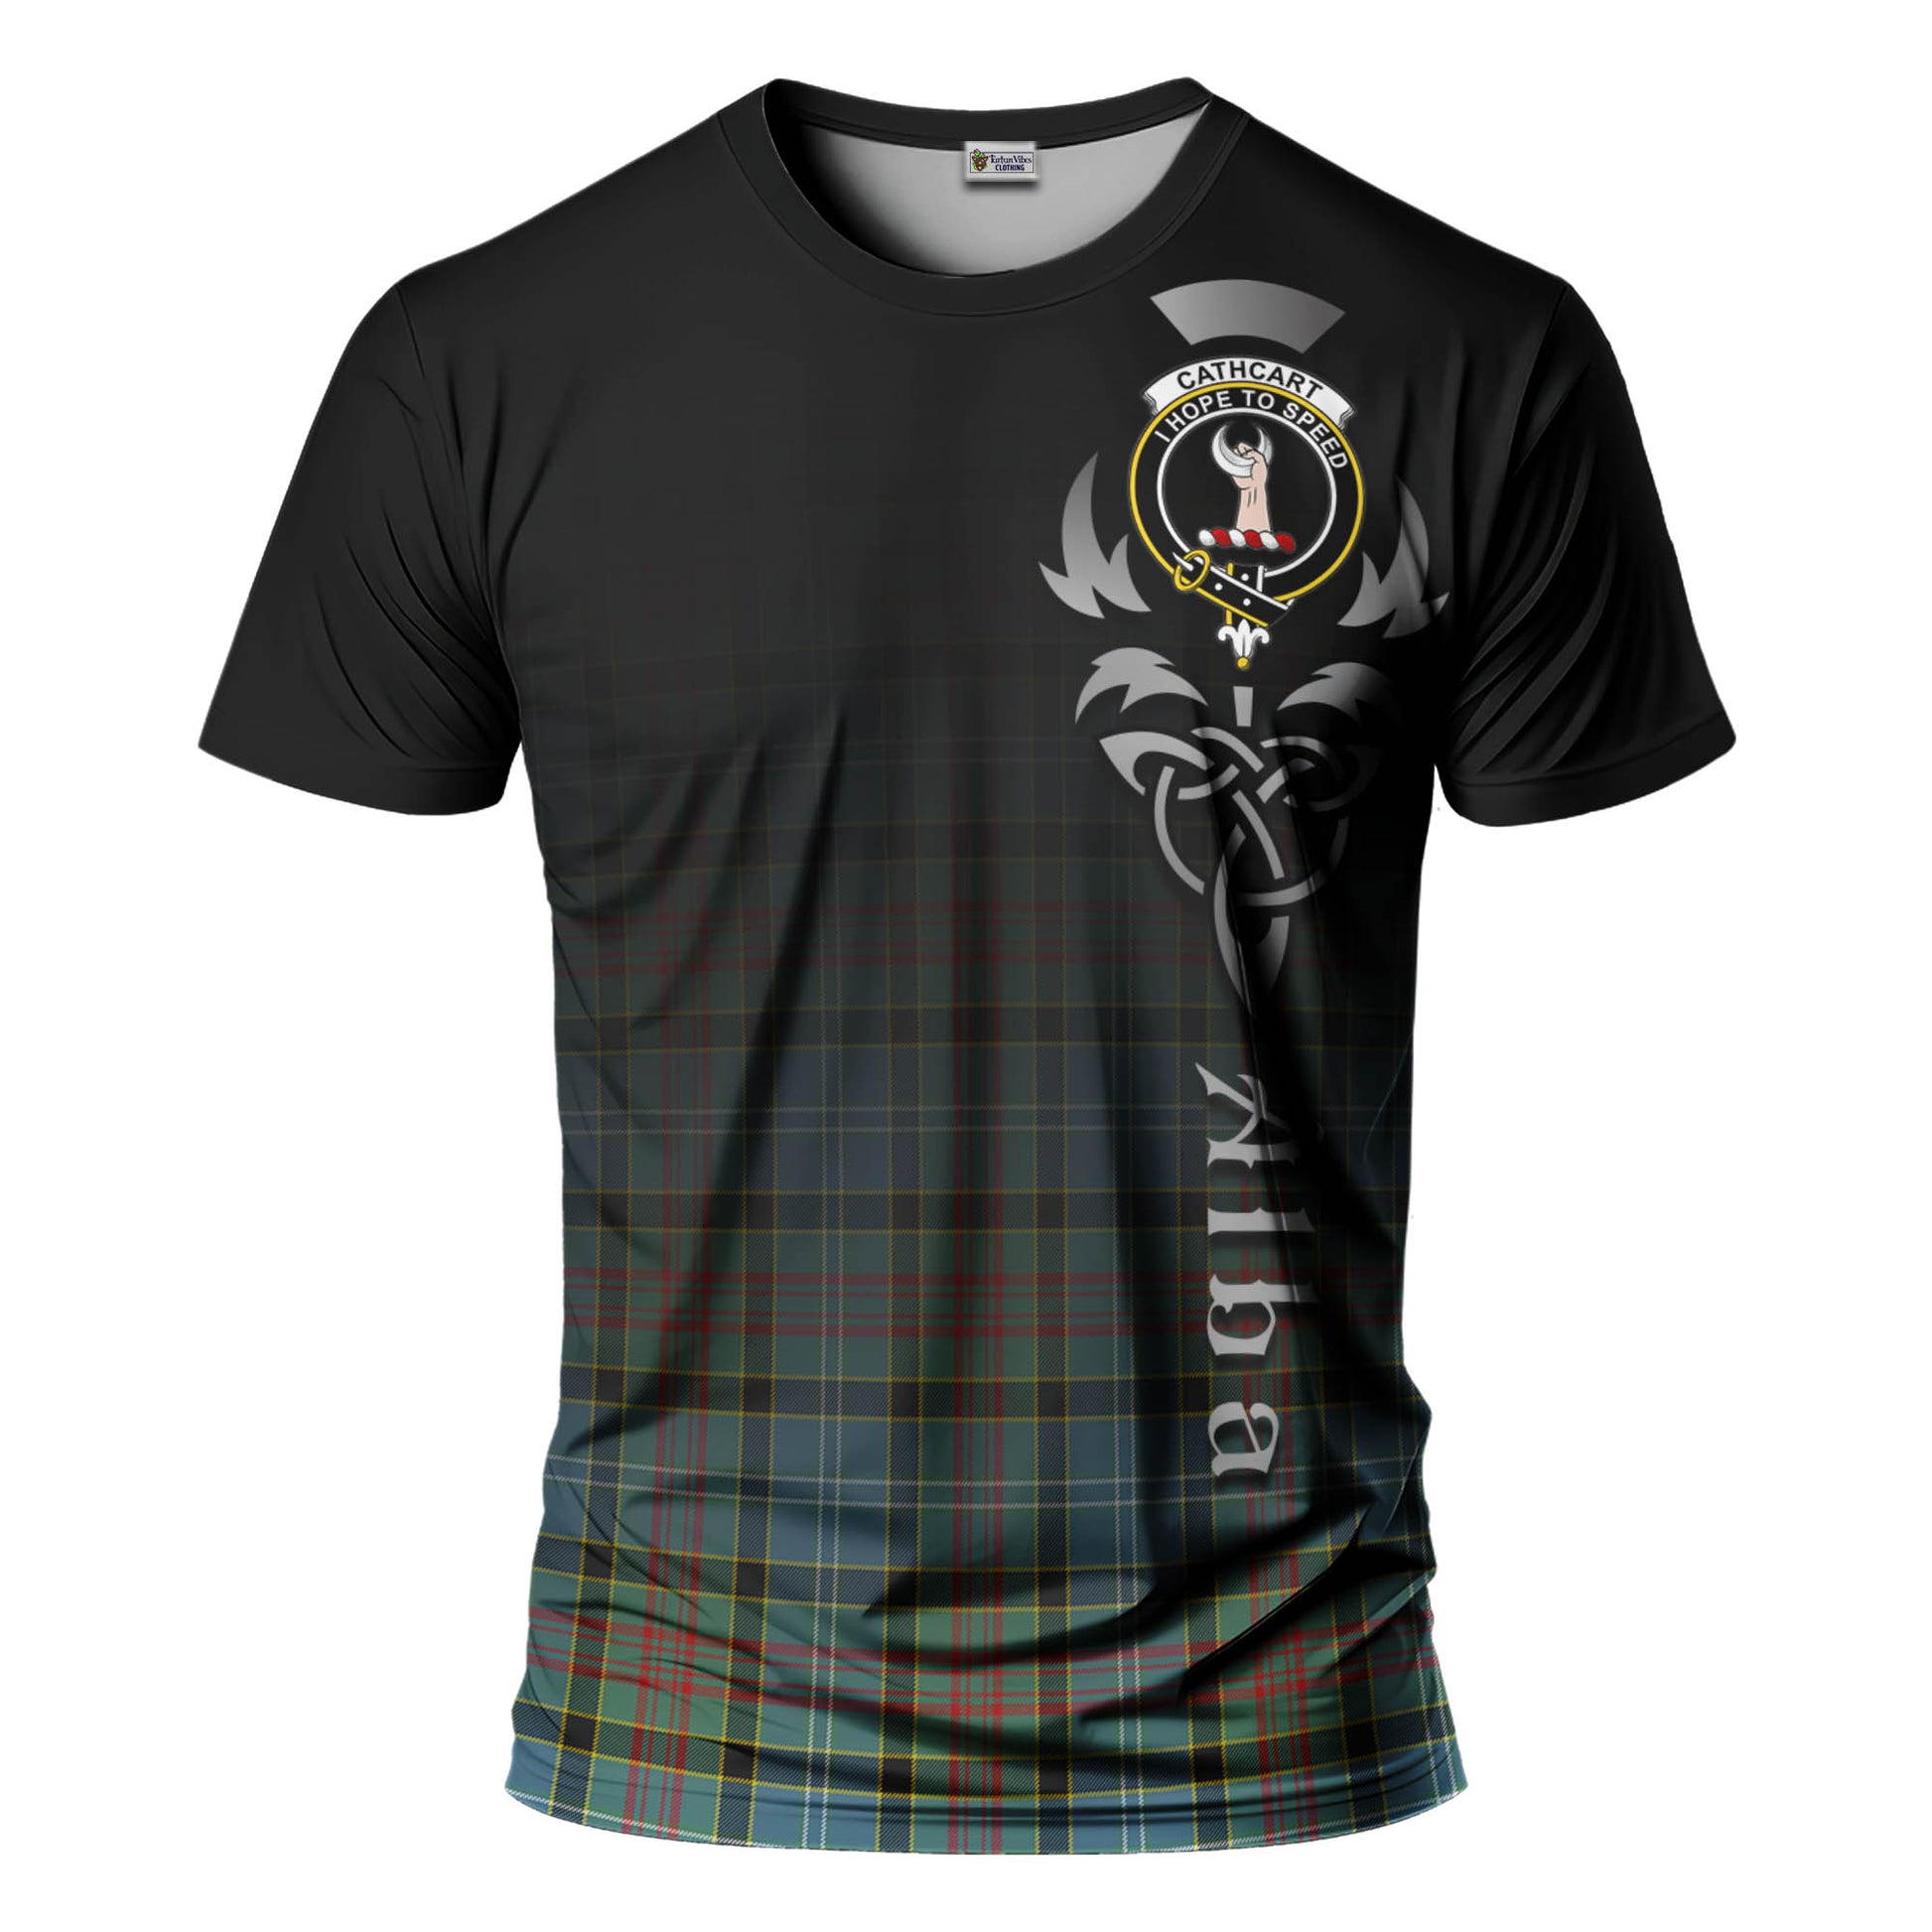 Tartan Vibes Clothing Cathcart Tartan T-Shirt Featuring Alba Gu Brath Family Crest Celtic Inspired